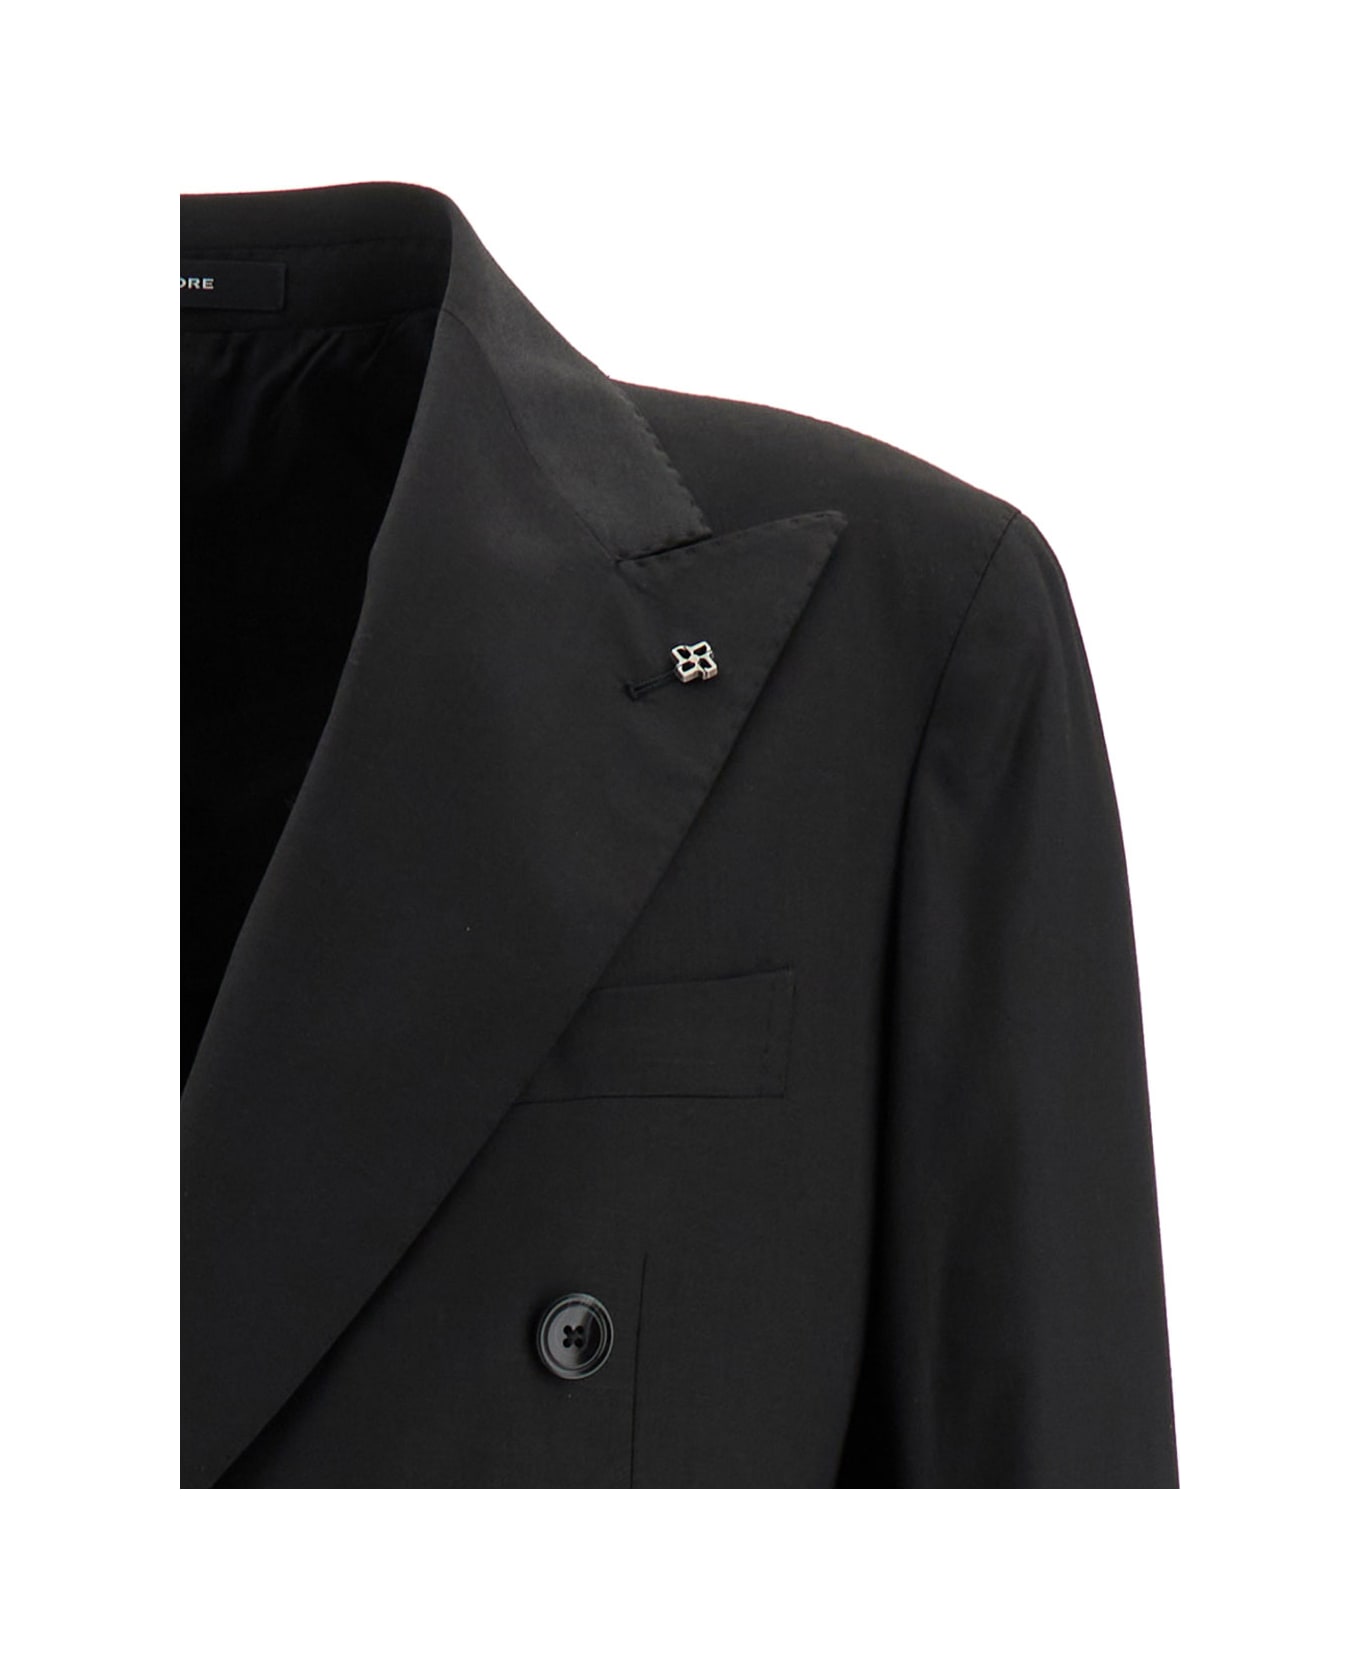 Tagliatore Black Double-breasted Jacket With Peak Revers In Wool Blend Man - Black